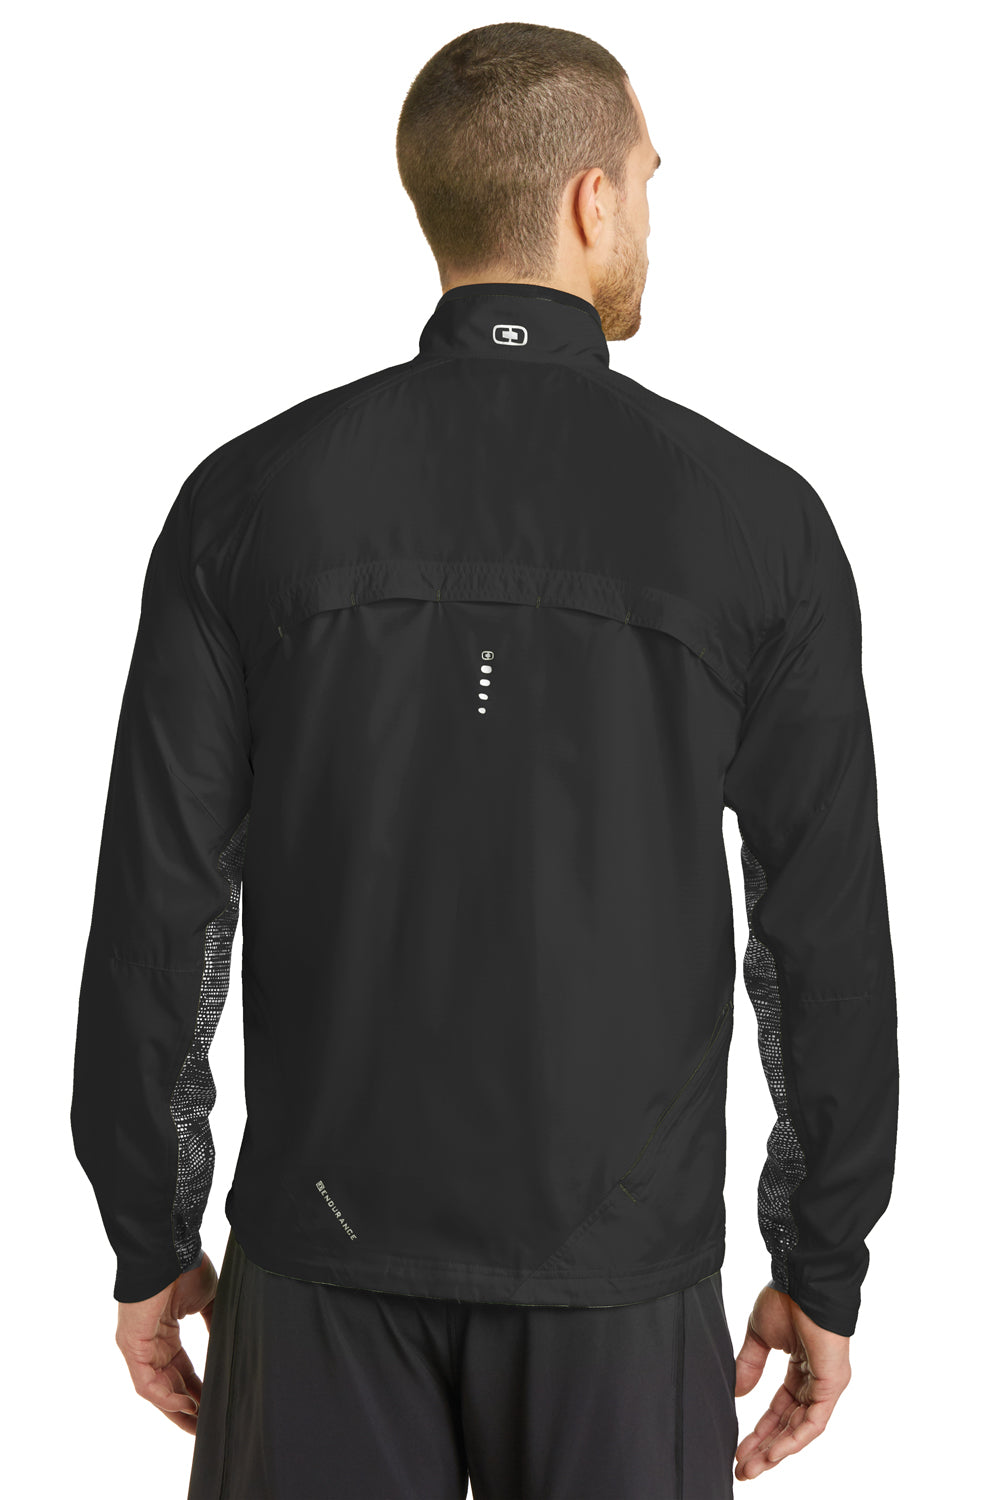 Ogio OE710 Mens Endurance Trainer Wind & Water Resistant Full Zip Jacket Black Back